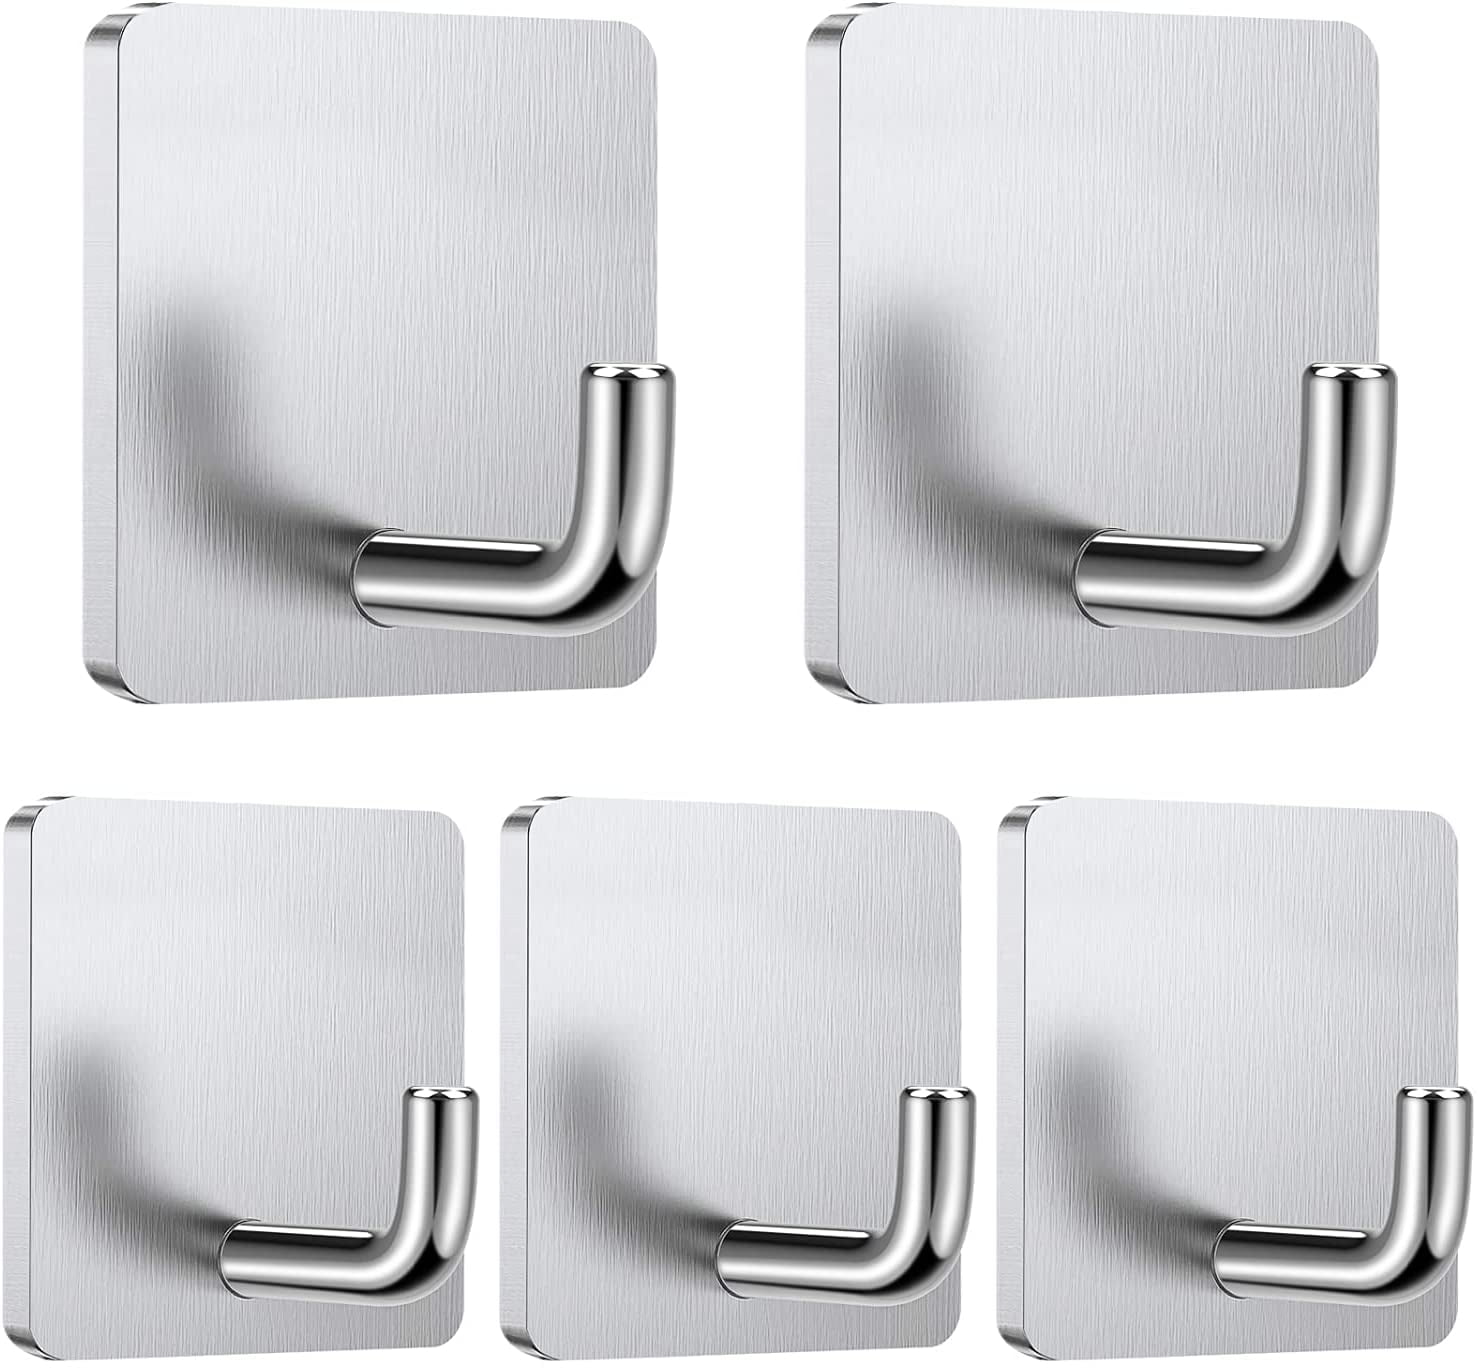 6pcs Self Adhesive Wall Sticky Hooks Key Rack Coat Bathroom Towel Wall Hangers 